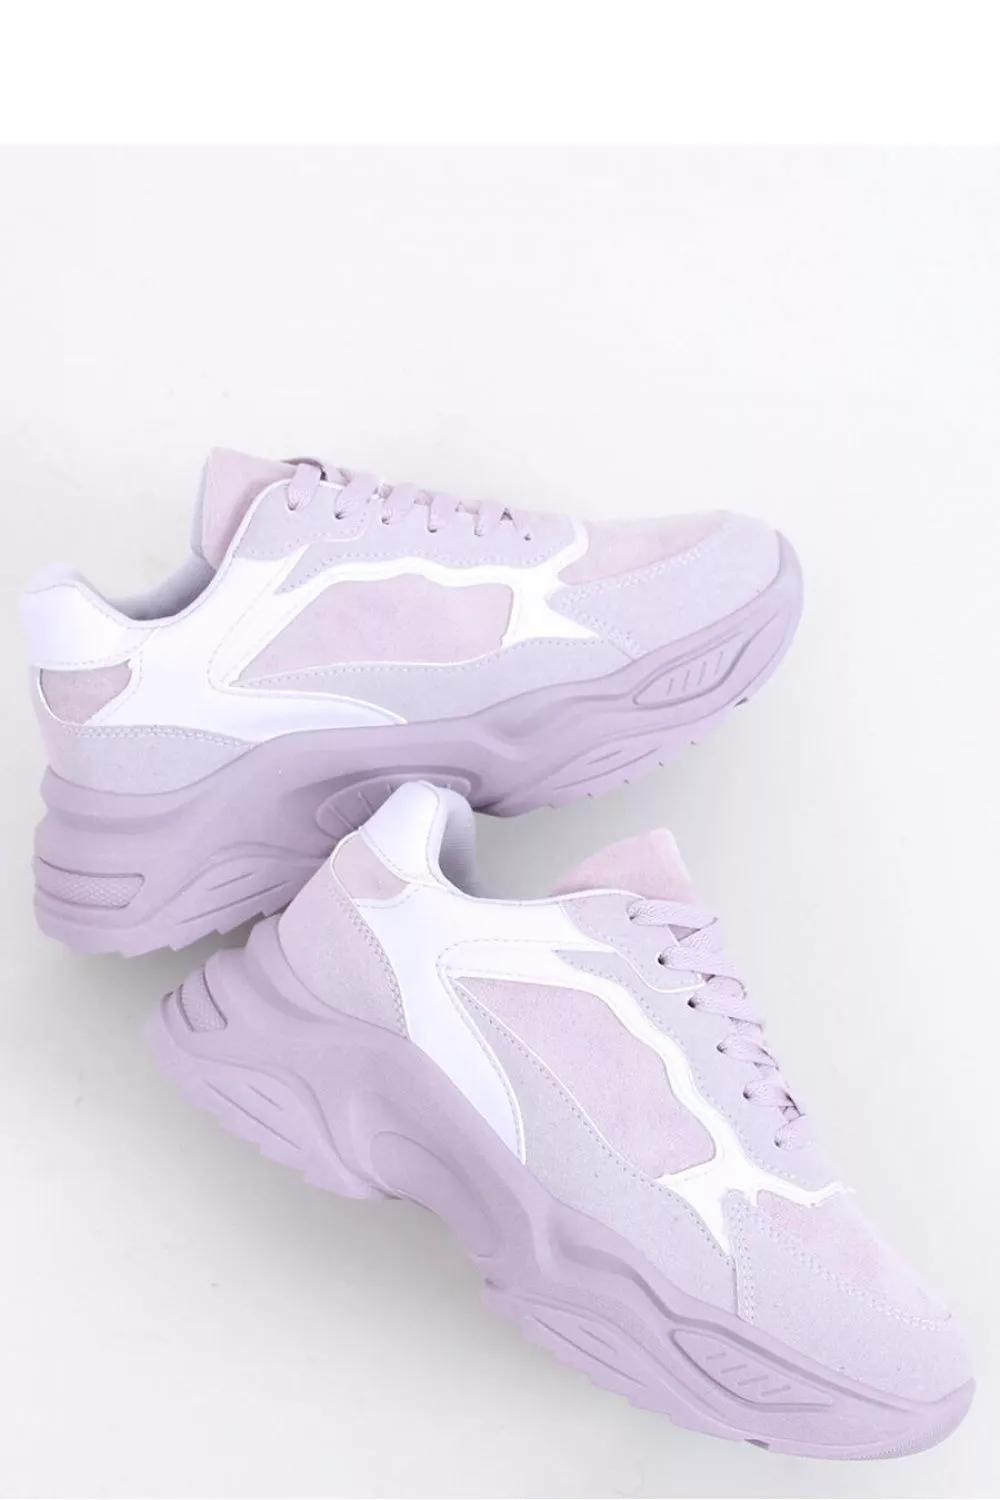 Pantofi sport dama violet - pantofi sport dama, tenisi dama